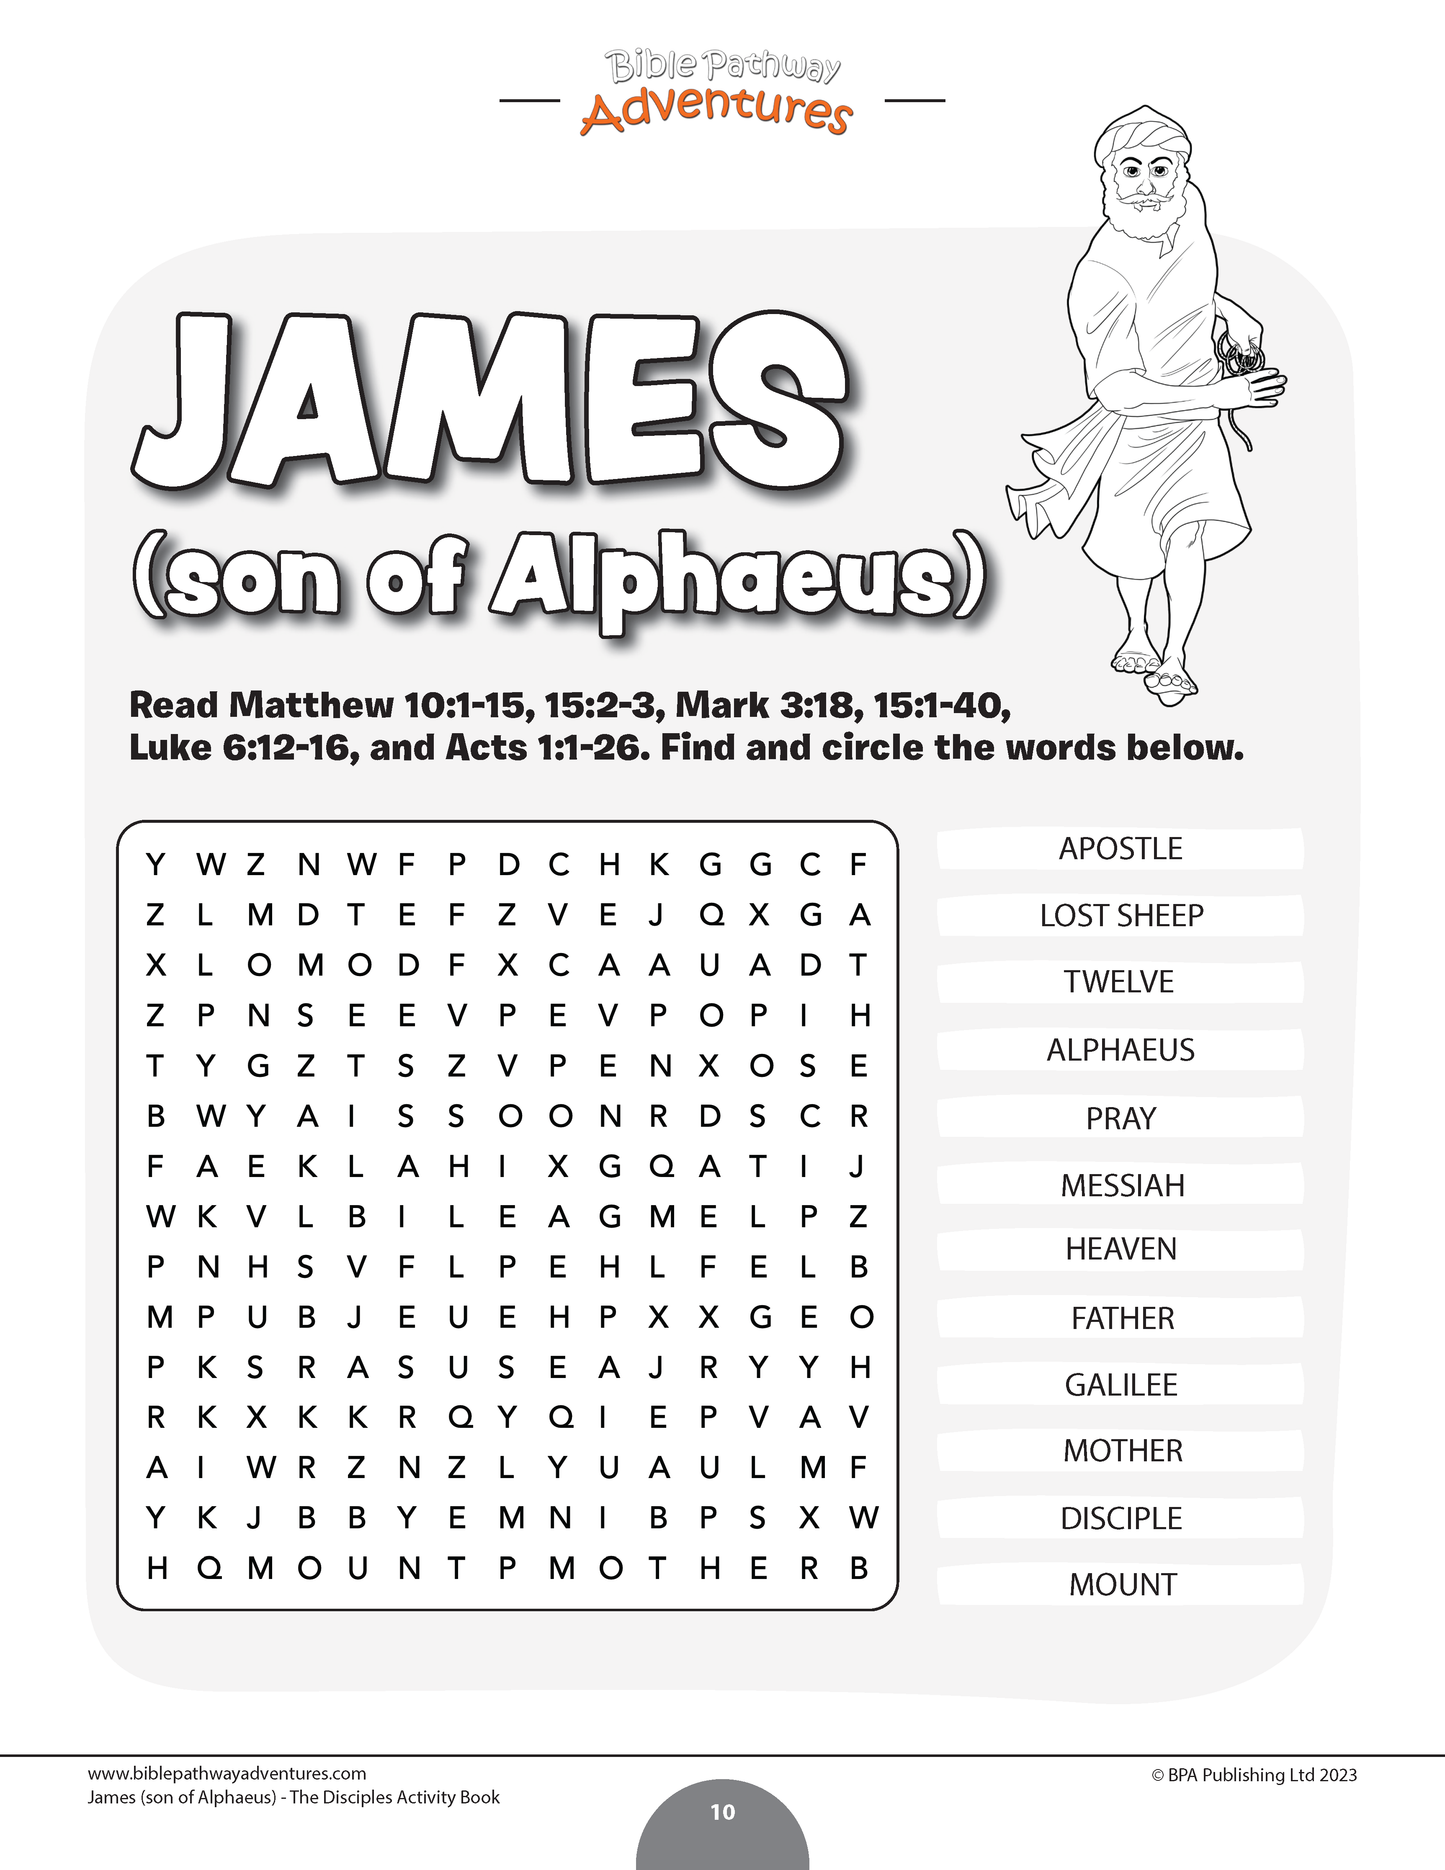 James (son of Alphaeus): The Disciple Activity Book (PDF)